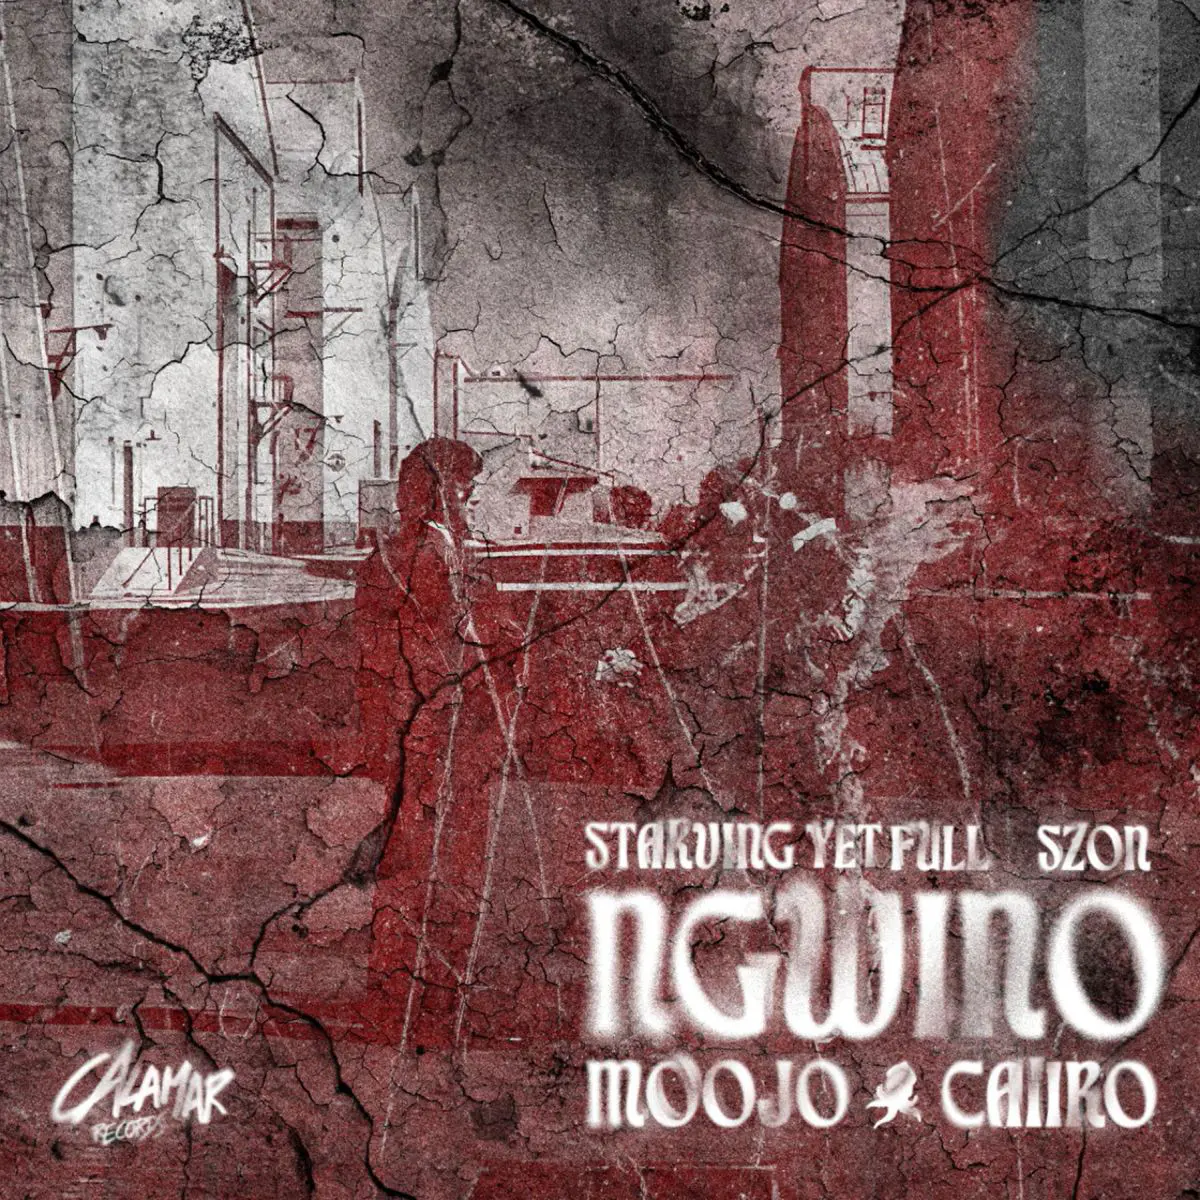 Moojo & Caiiro – NGWINO EP